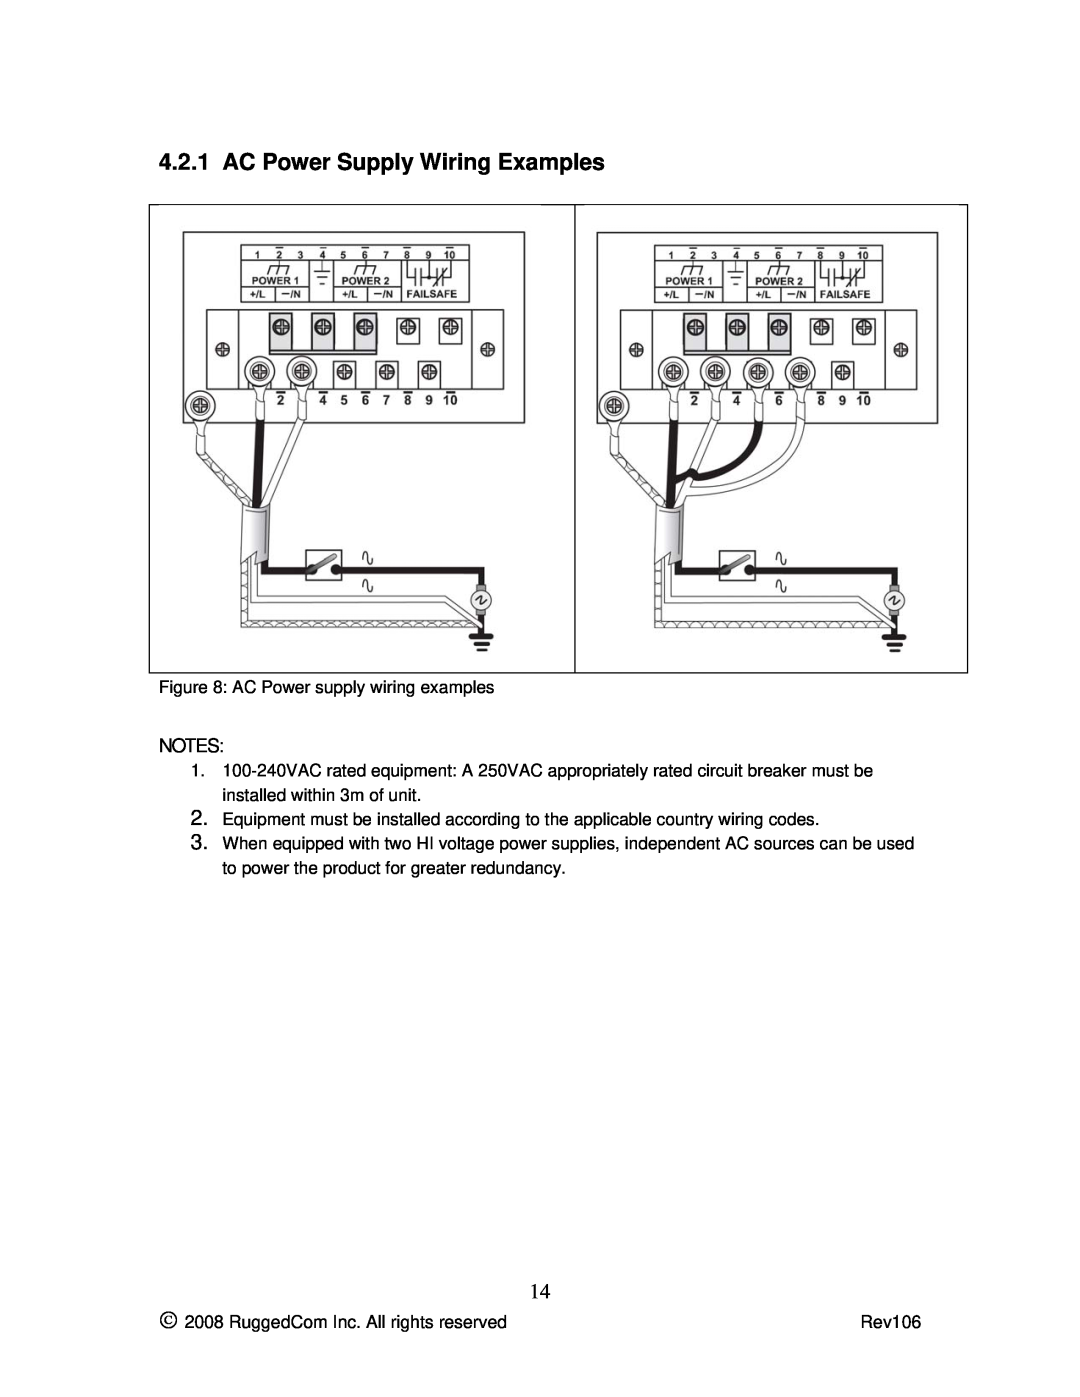 RuggedCom M2100 manual AC Power Supply Wiring Examples 